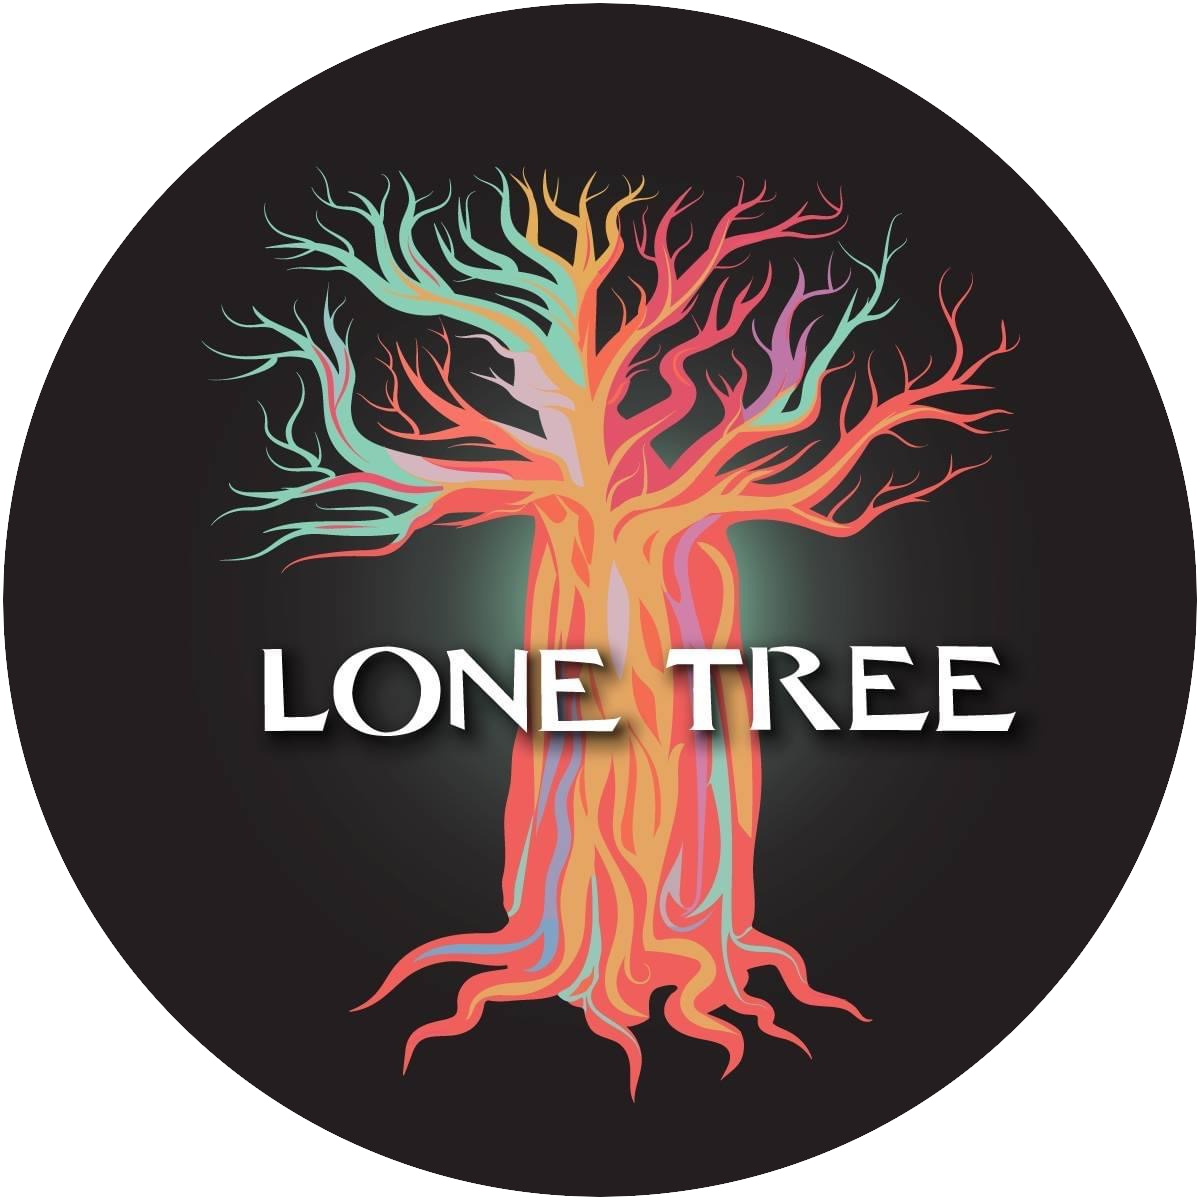 Lone Tree Band